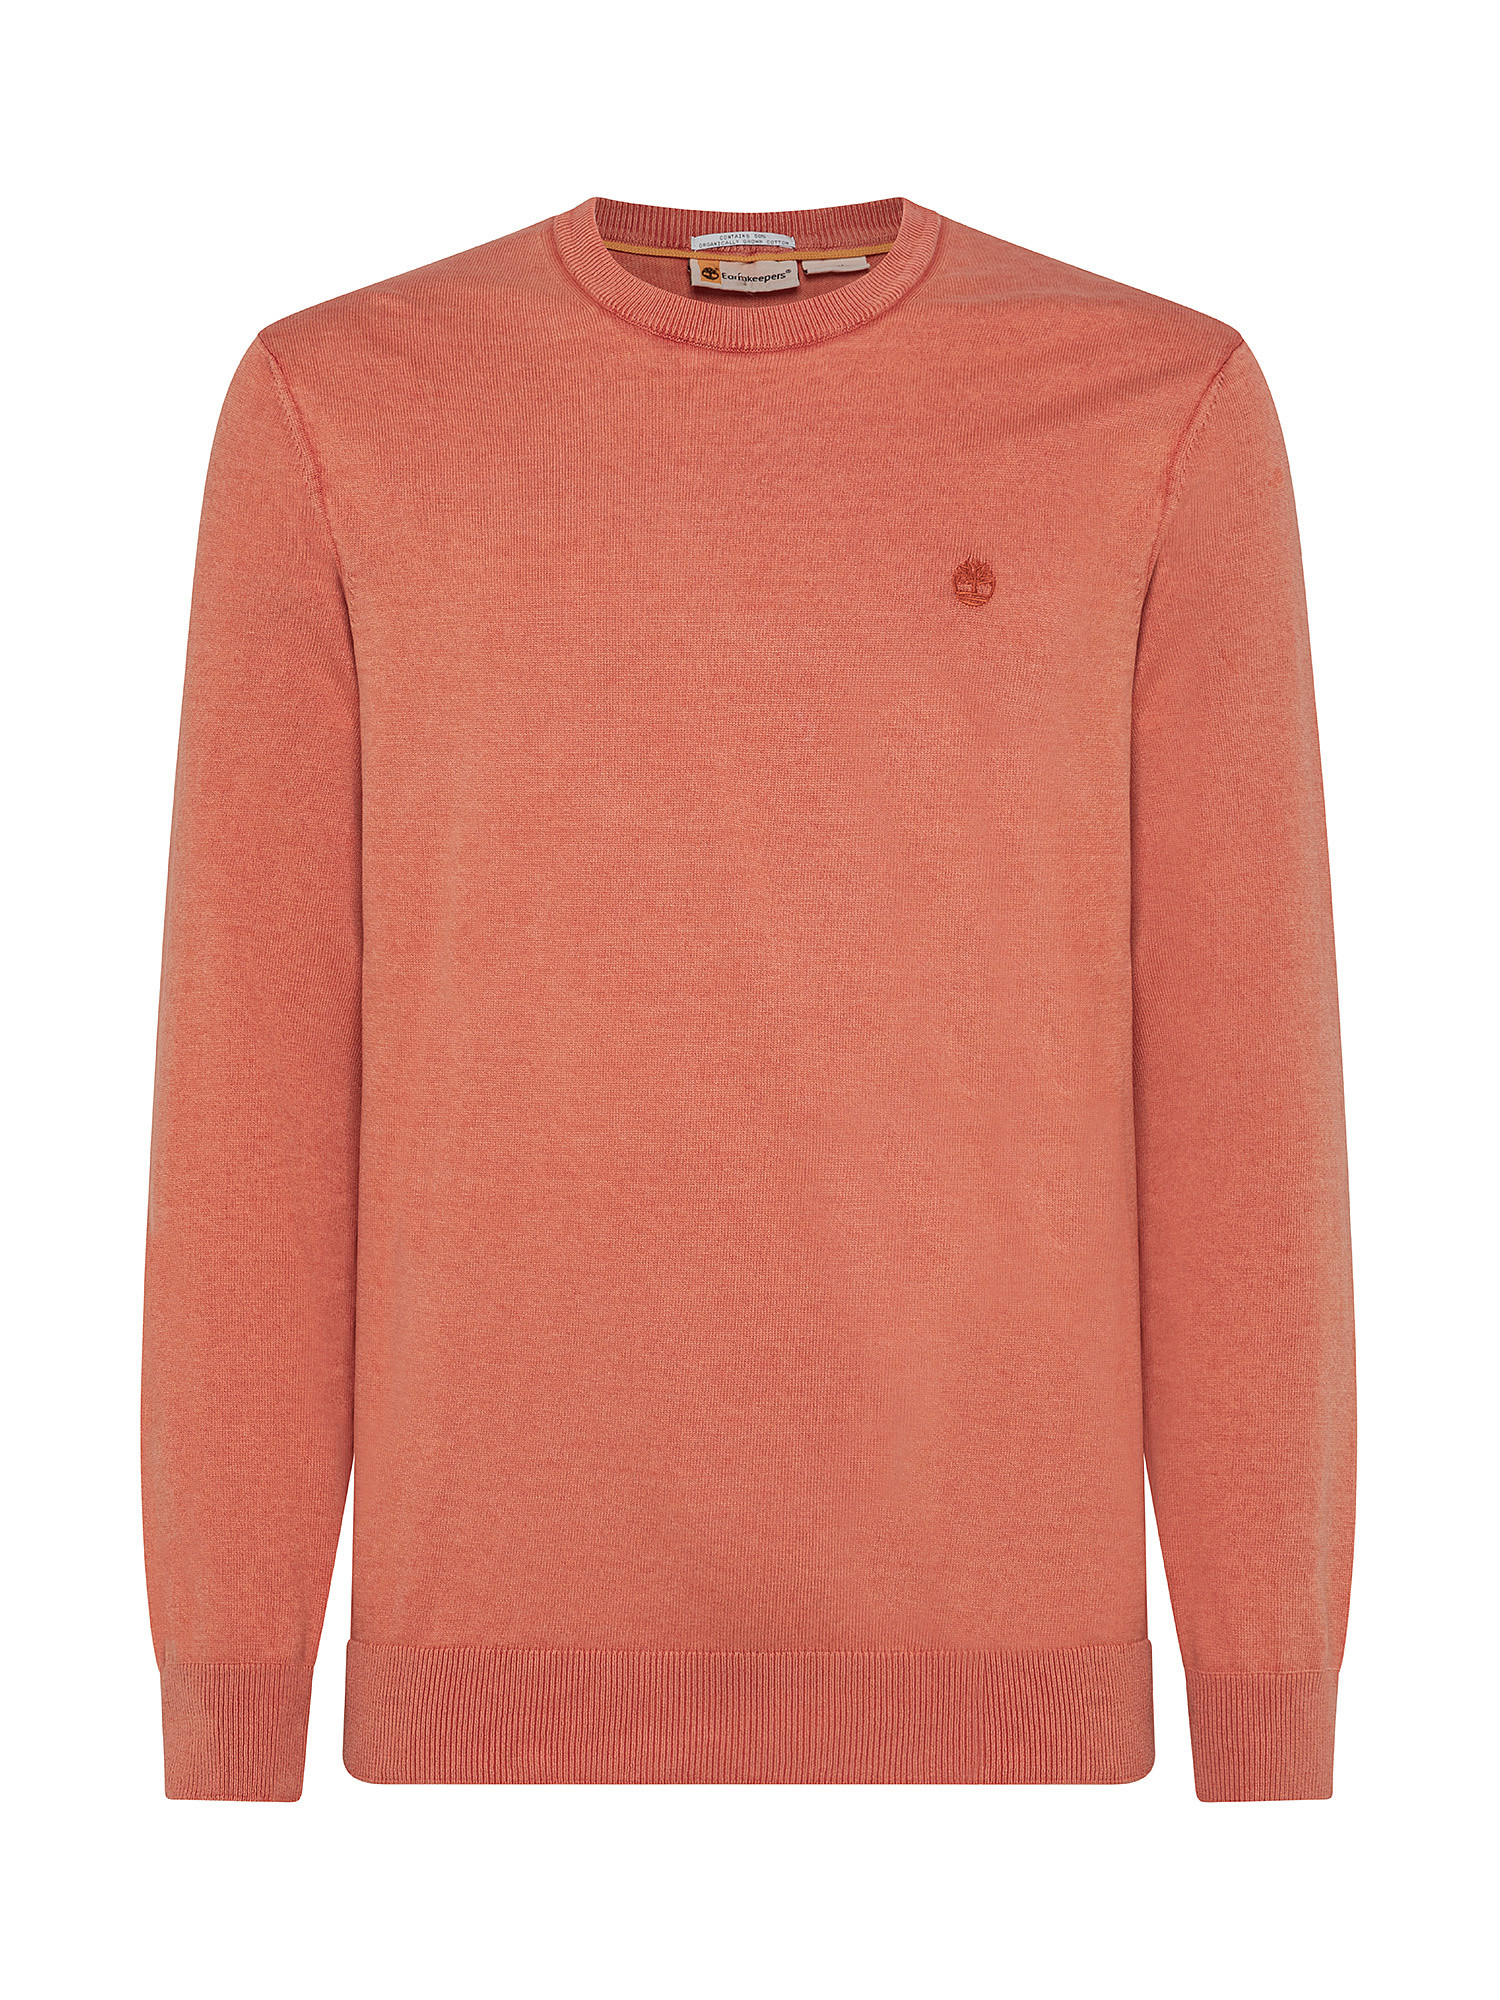 EK + Men's Lightweight Sweater, Orange, large image number 0